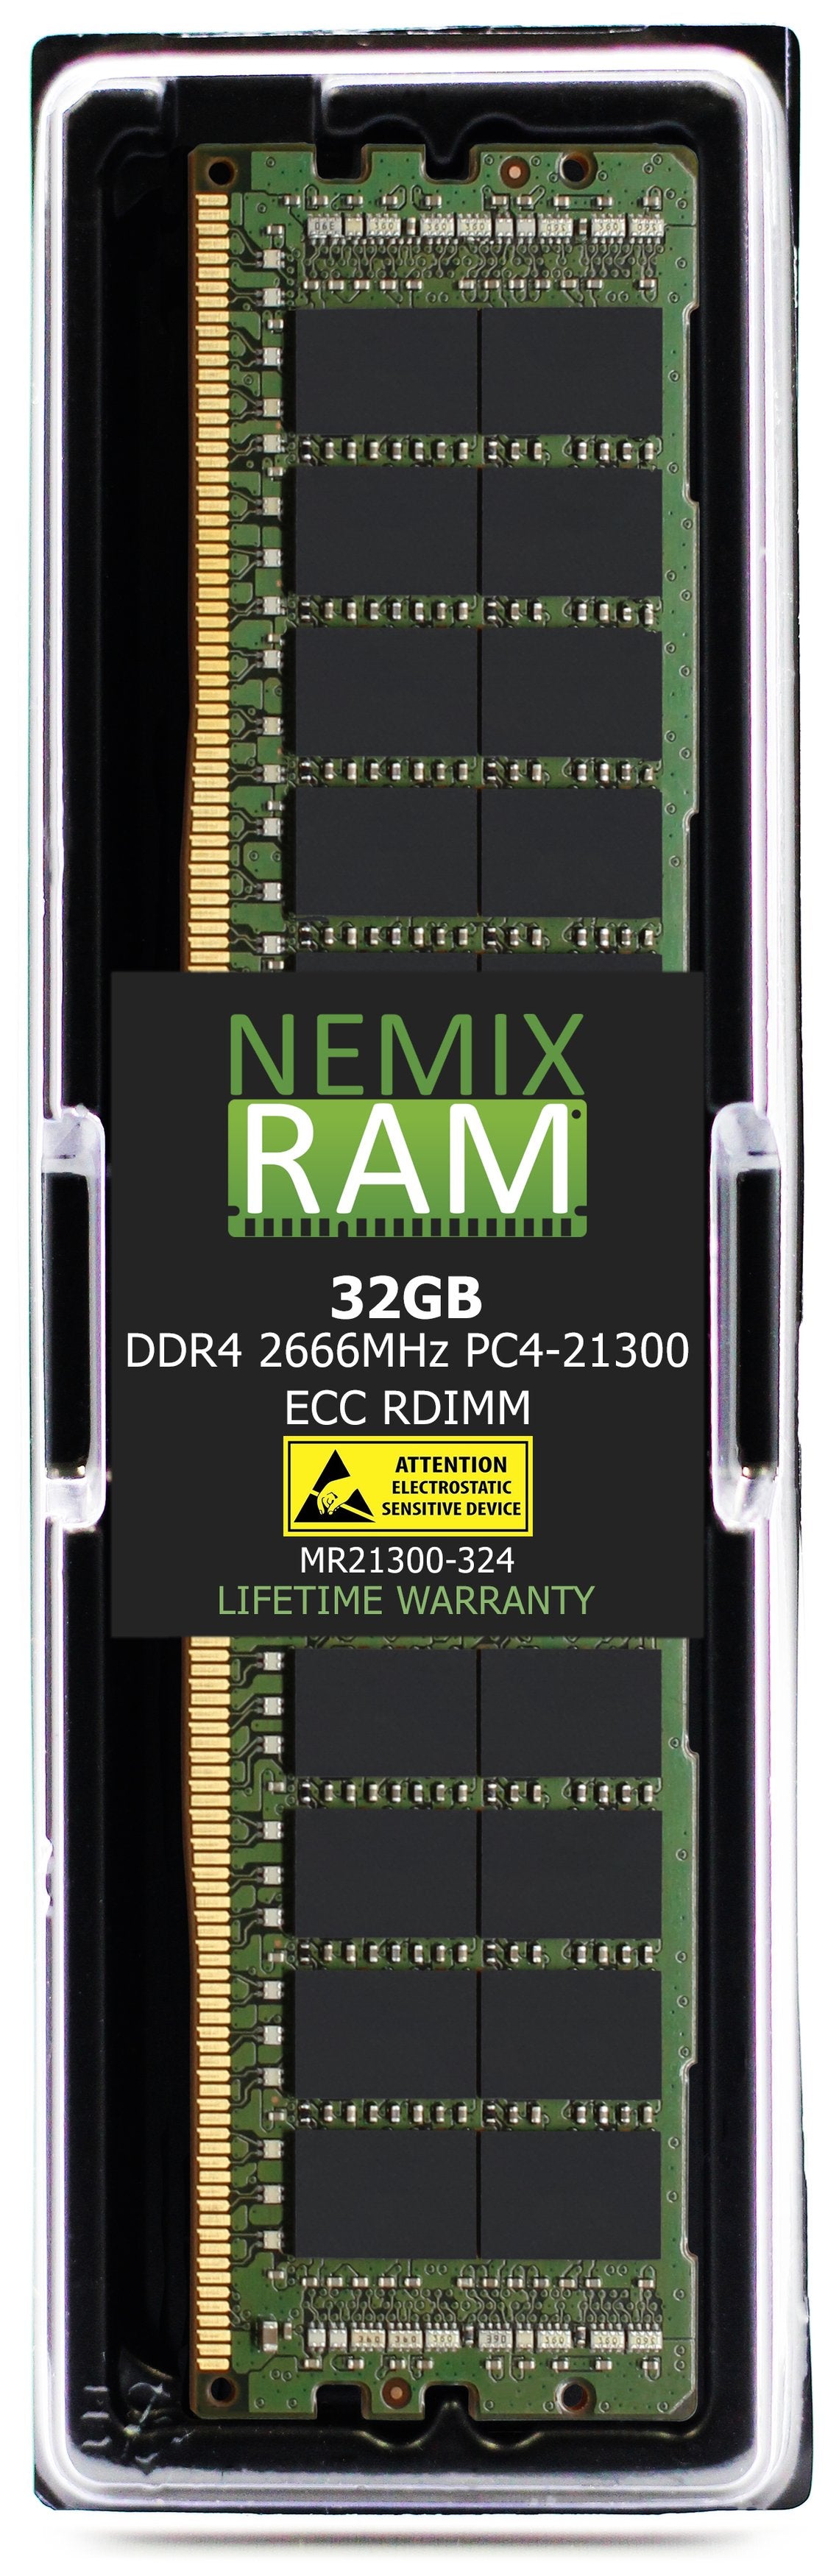 32GB DDR4 2666MHZ PC4-21300 RDIMM Compatible with Supermicro MEM-DR432L-SL03-ER26